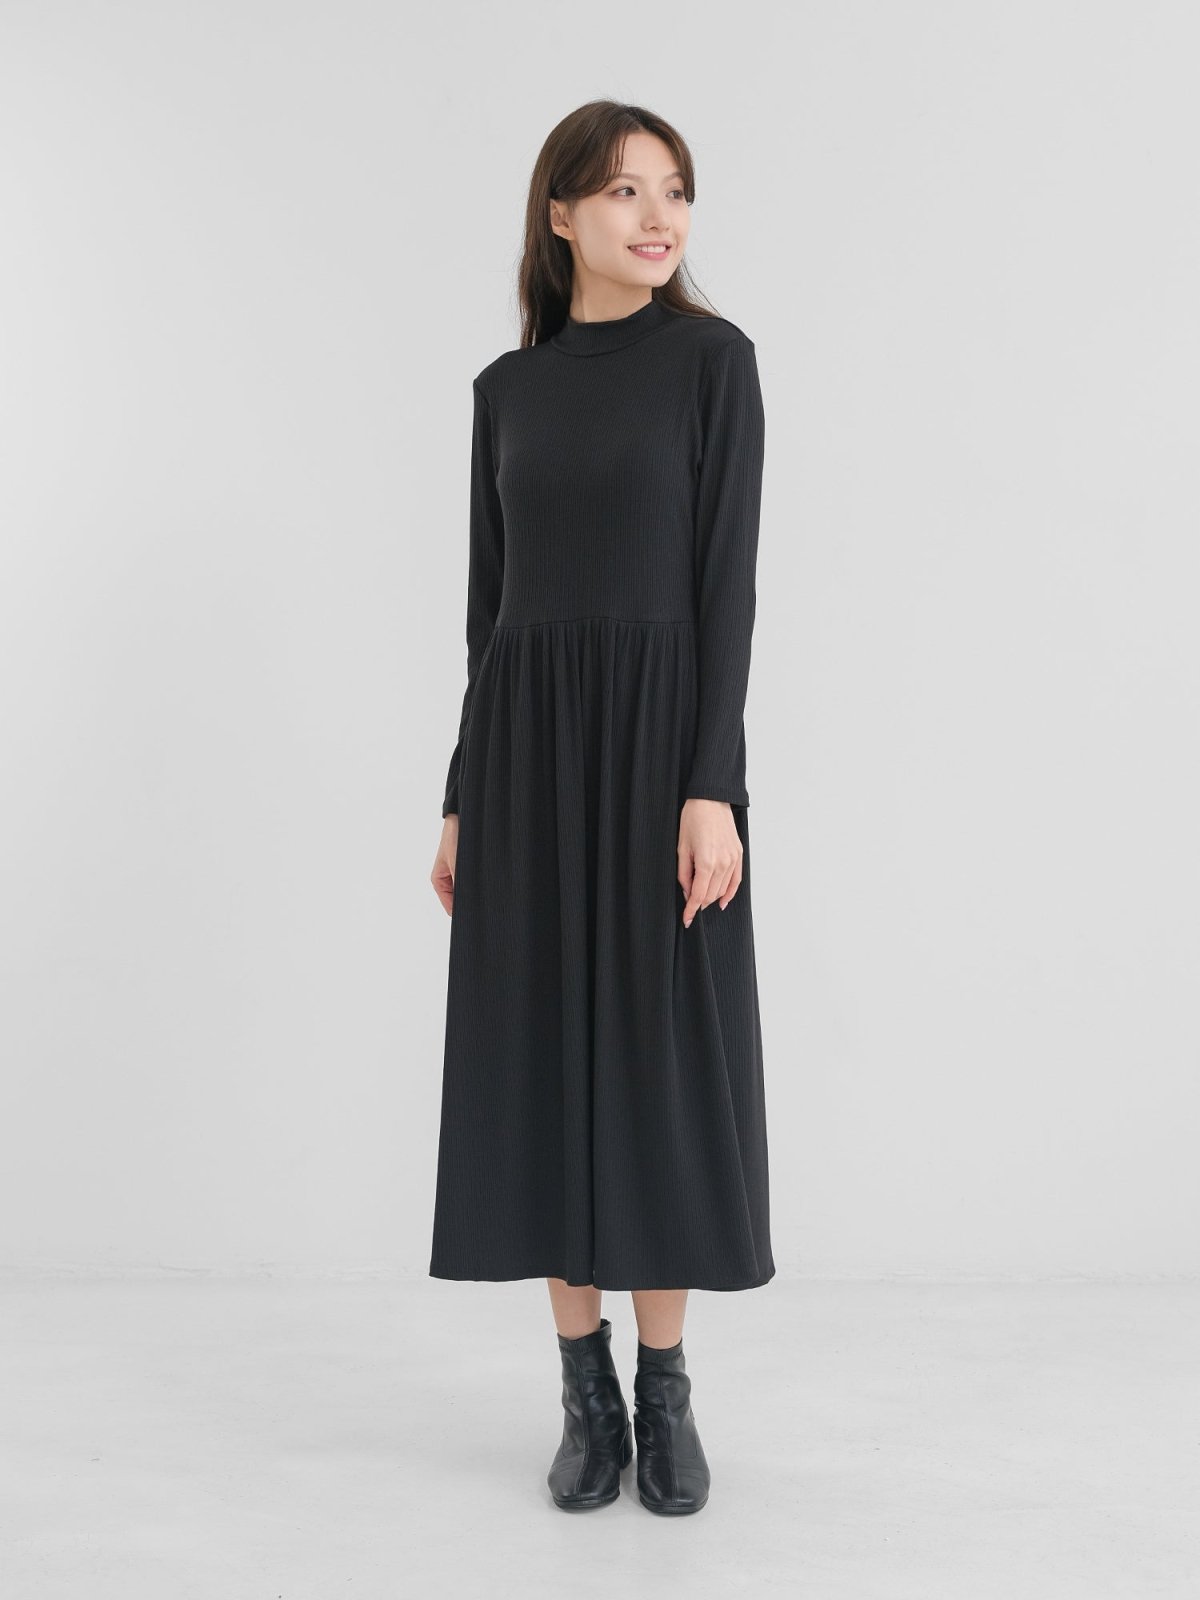 Melissa High Neck Midi Dress - DAG-DD1383-24BlackS - Black - S - D'zage Designs